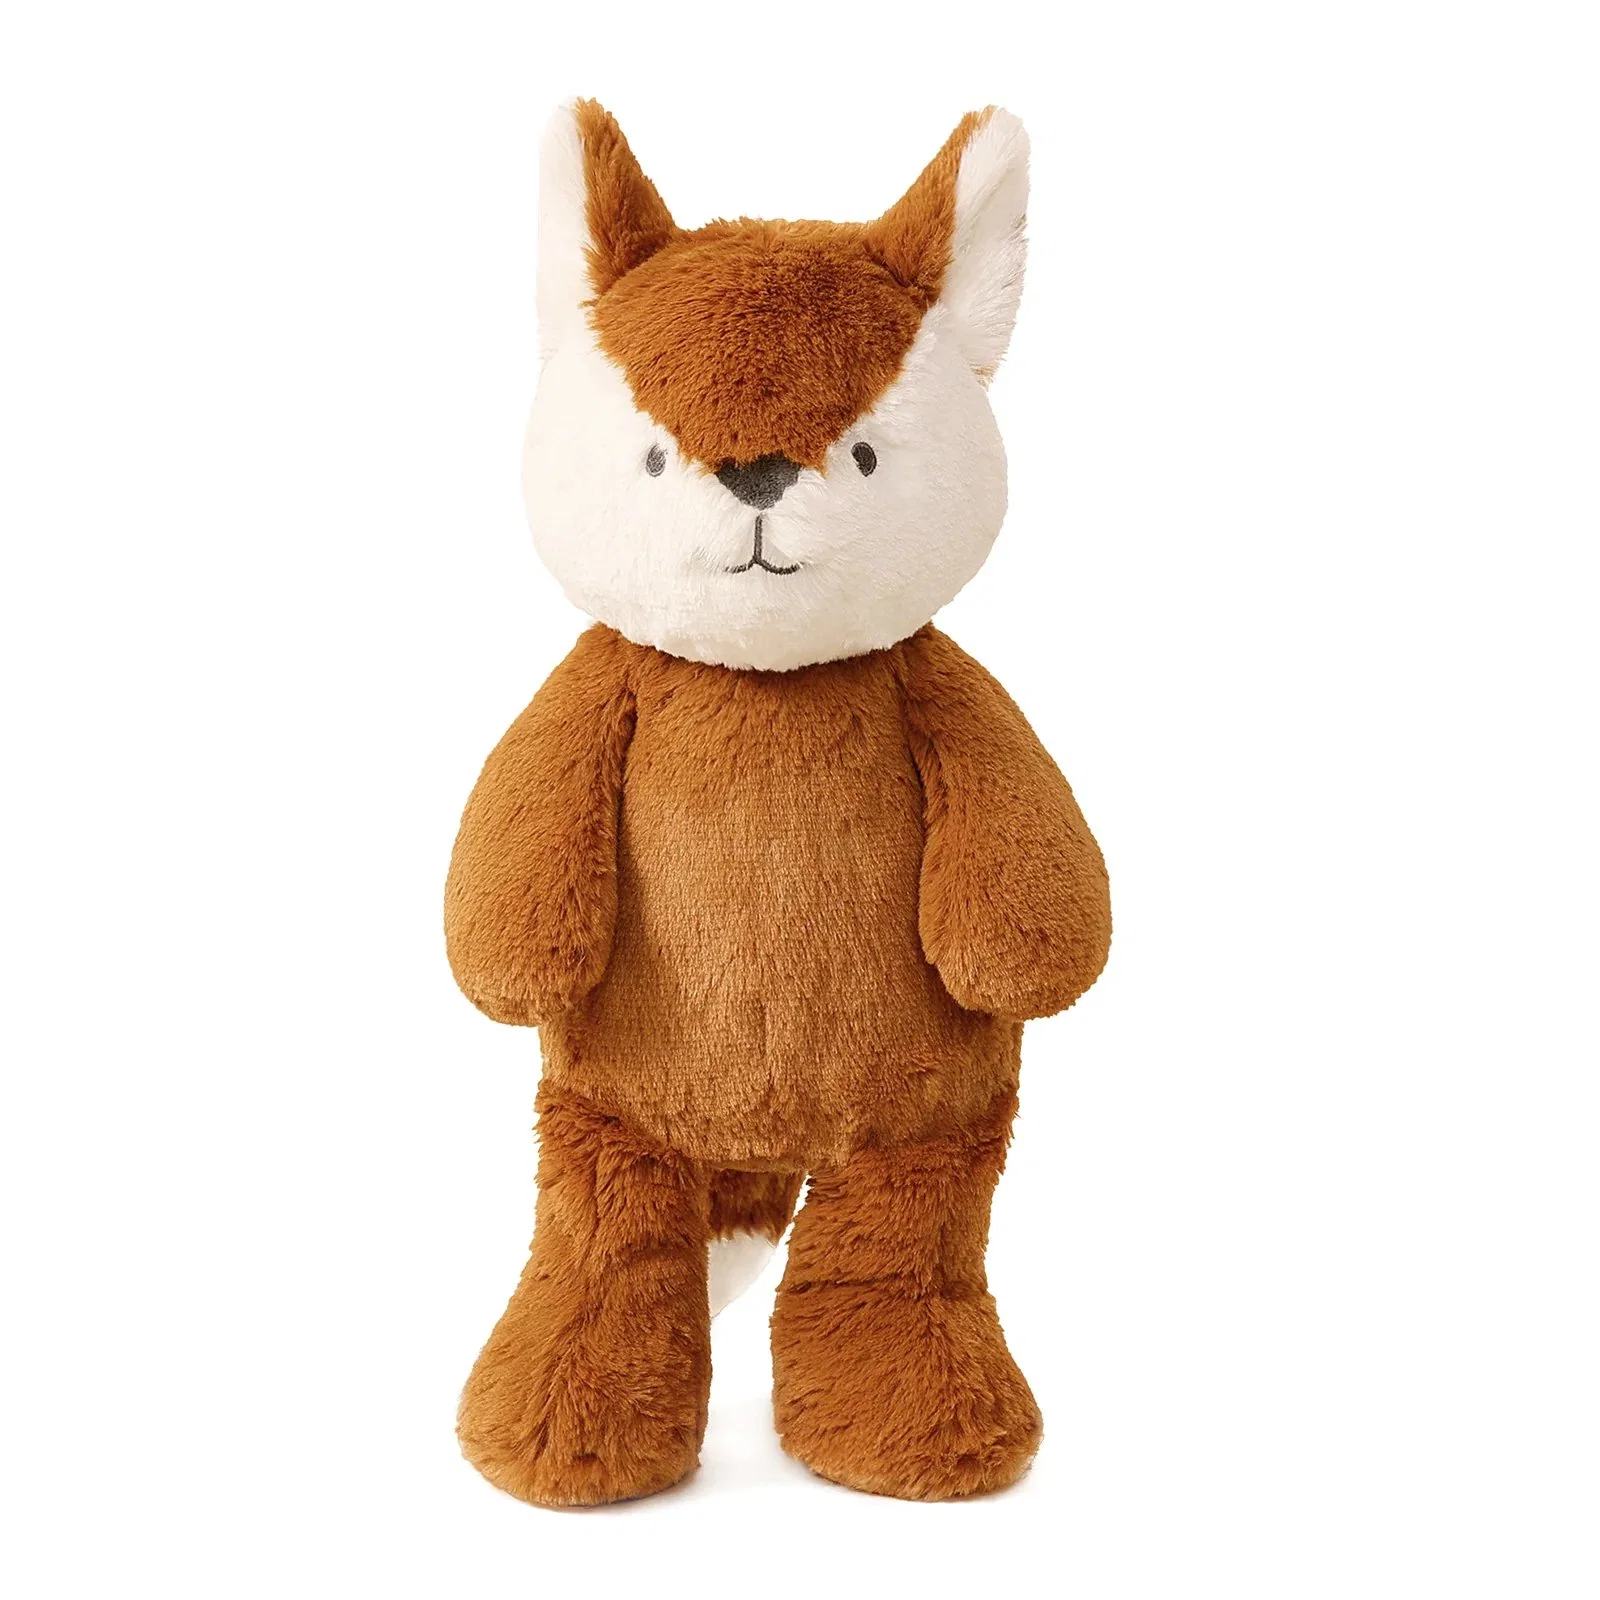 OEM ODM Soft Stuffed Animal Plush Toy Cute Fox Plushies Mu100453